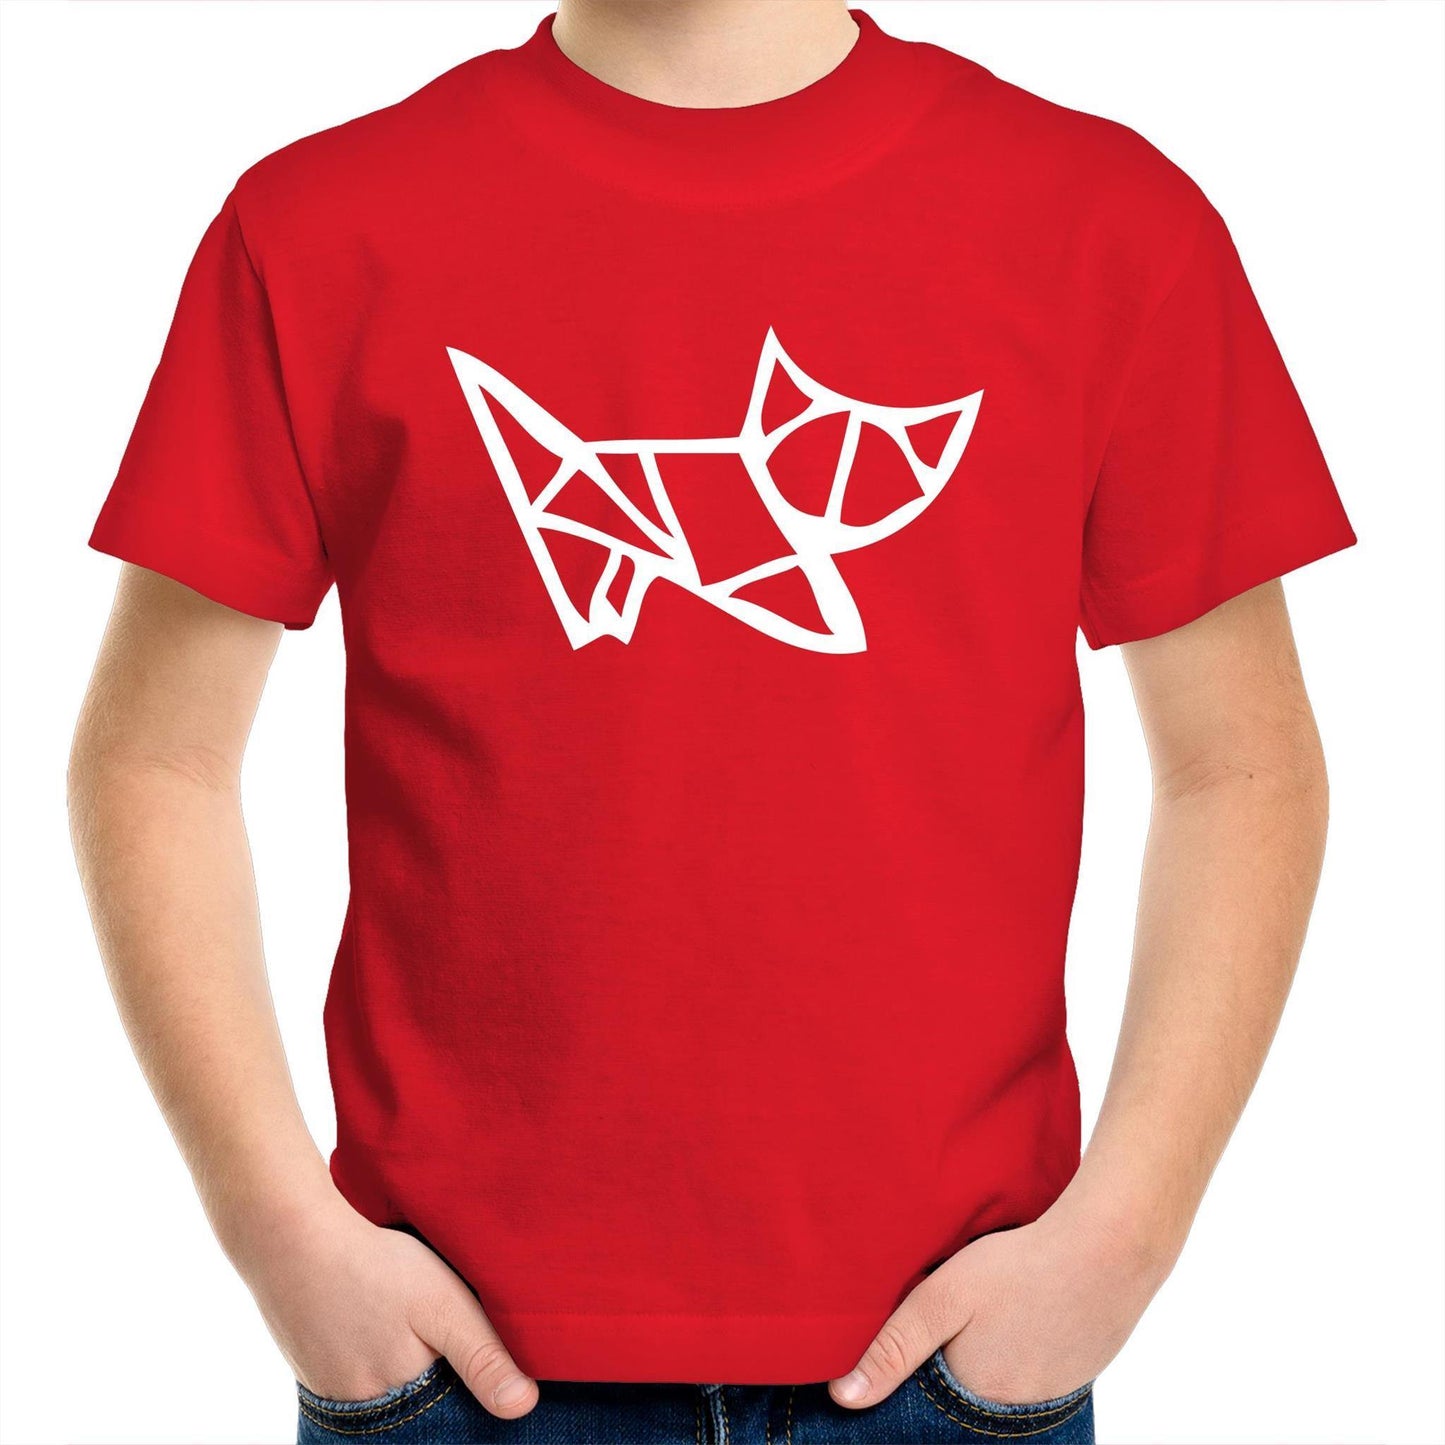 Origami Kitten - Kids Youth Crew T-Shirt Red Kids Youth T-shirt animal